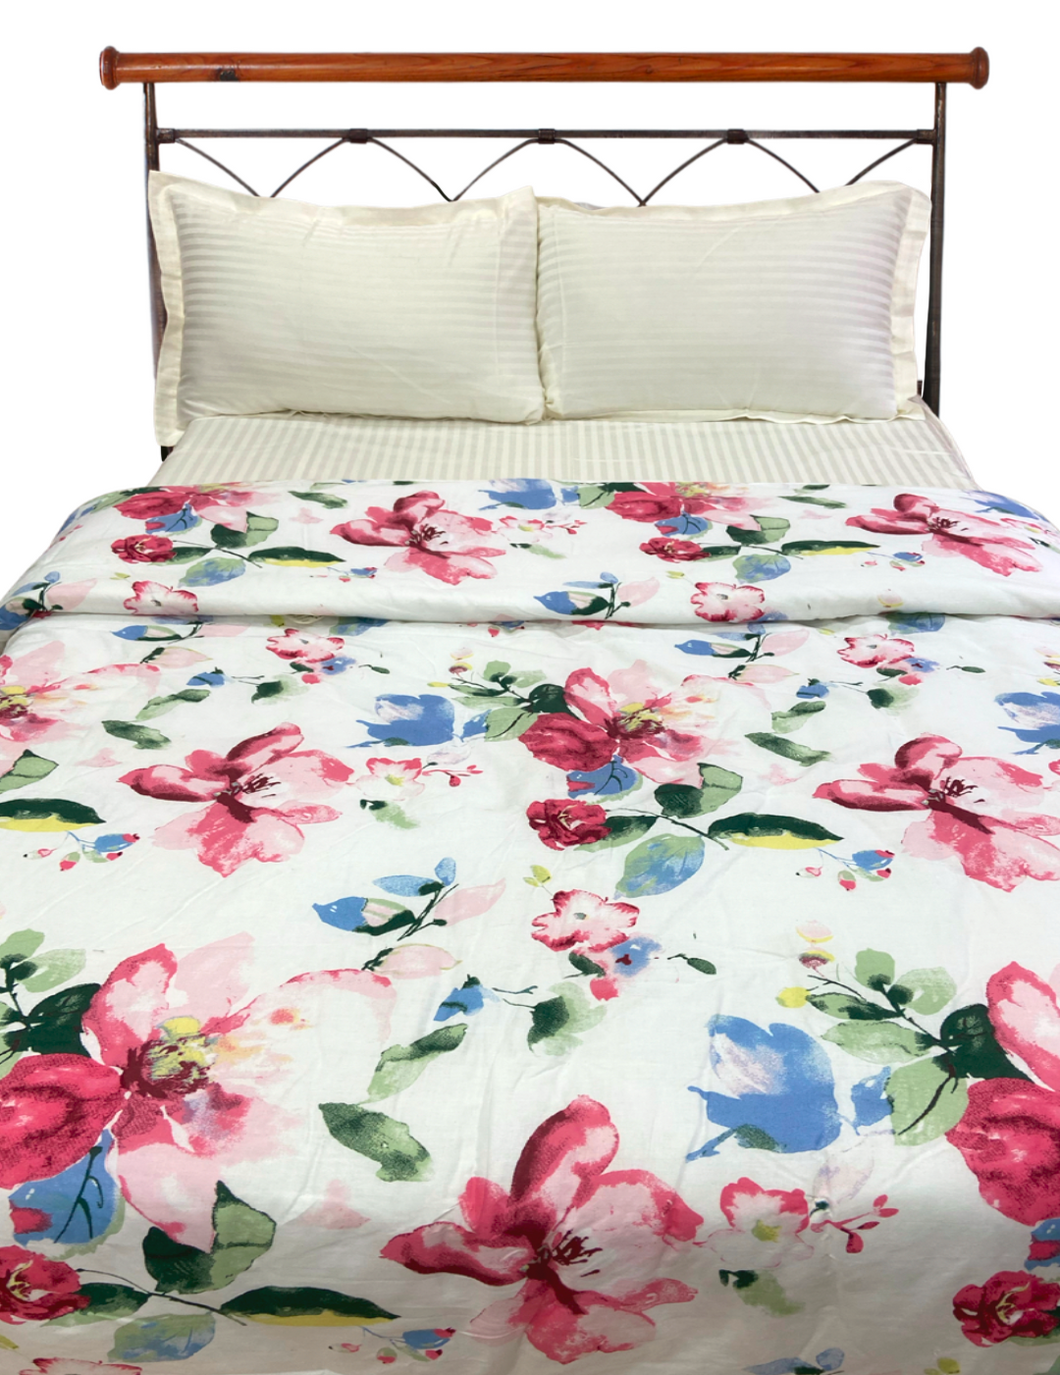 Floral Printed Comforter